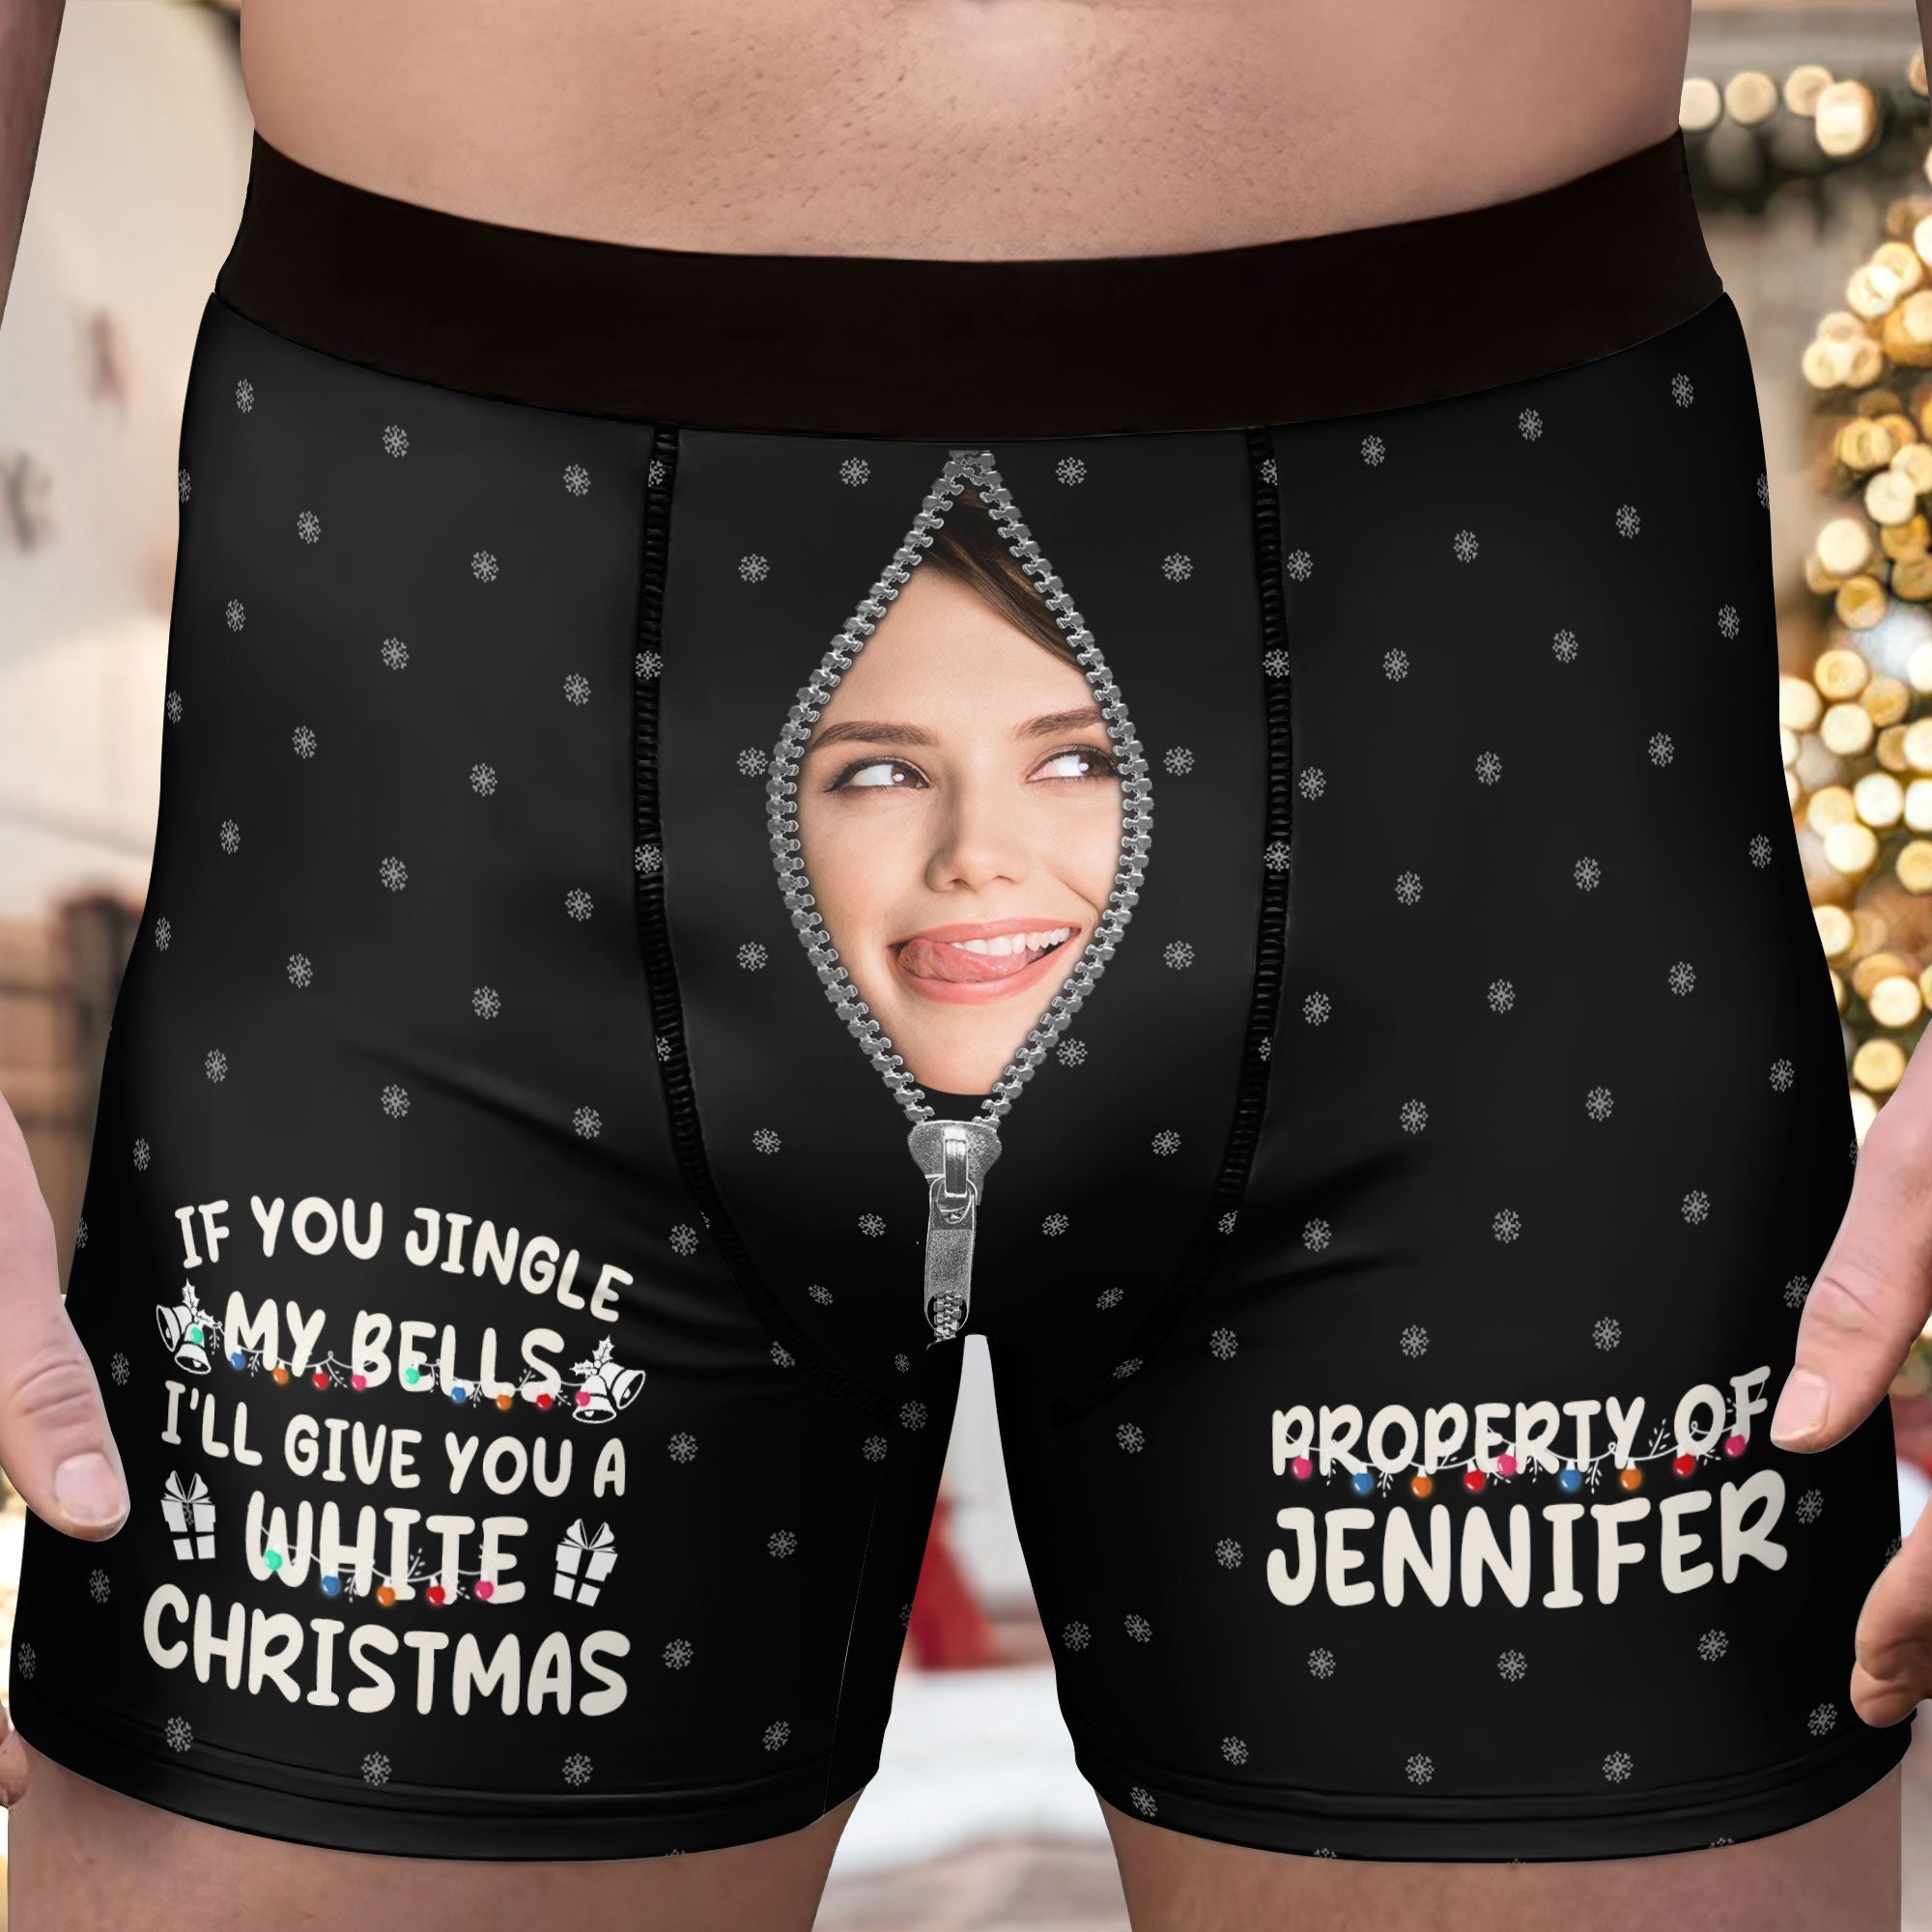 Underwear Expert - When you realize #Christmas is in 5 days🎁 # UnderwearExpert